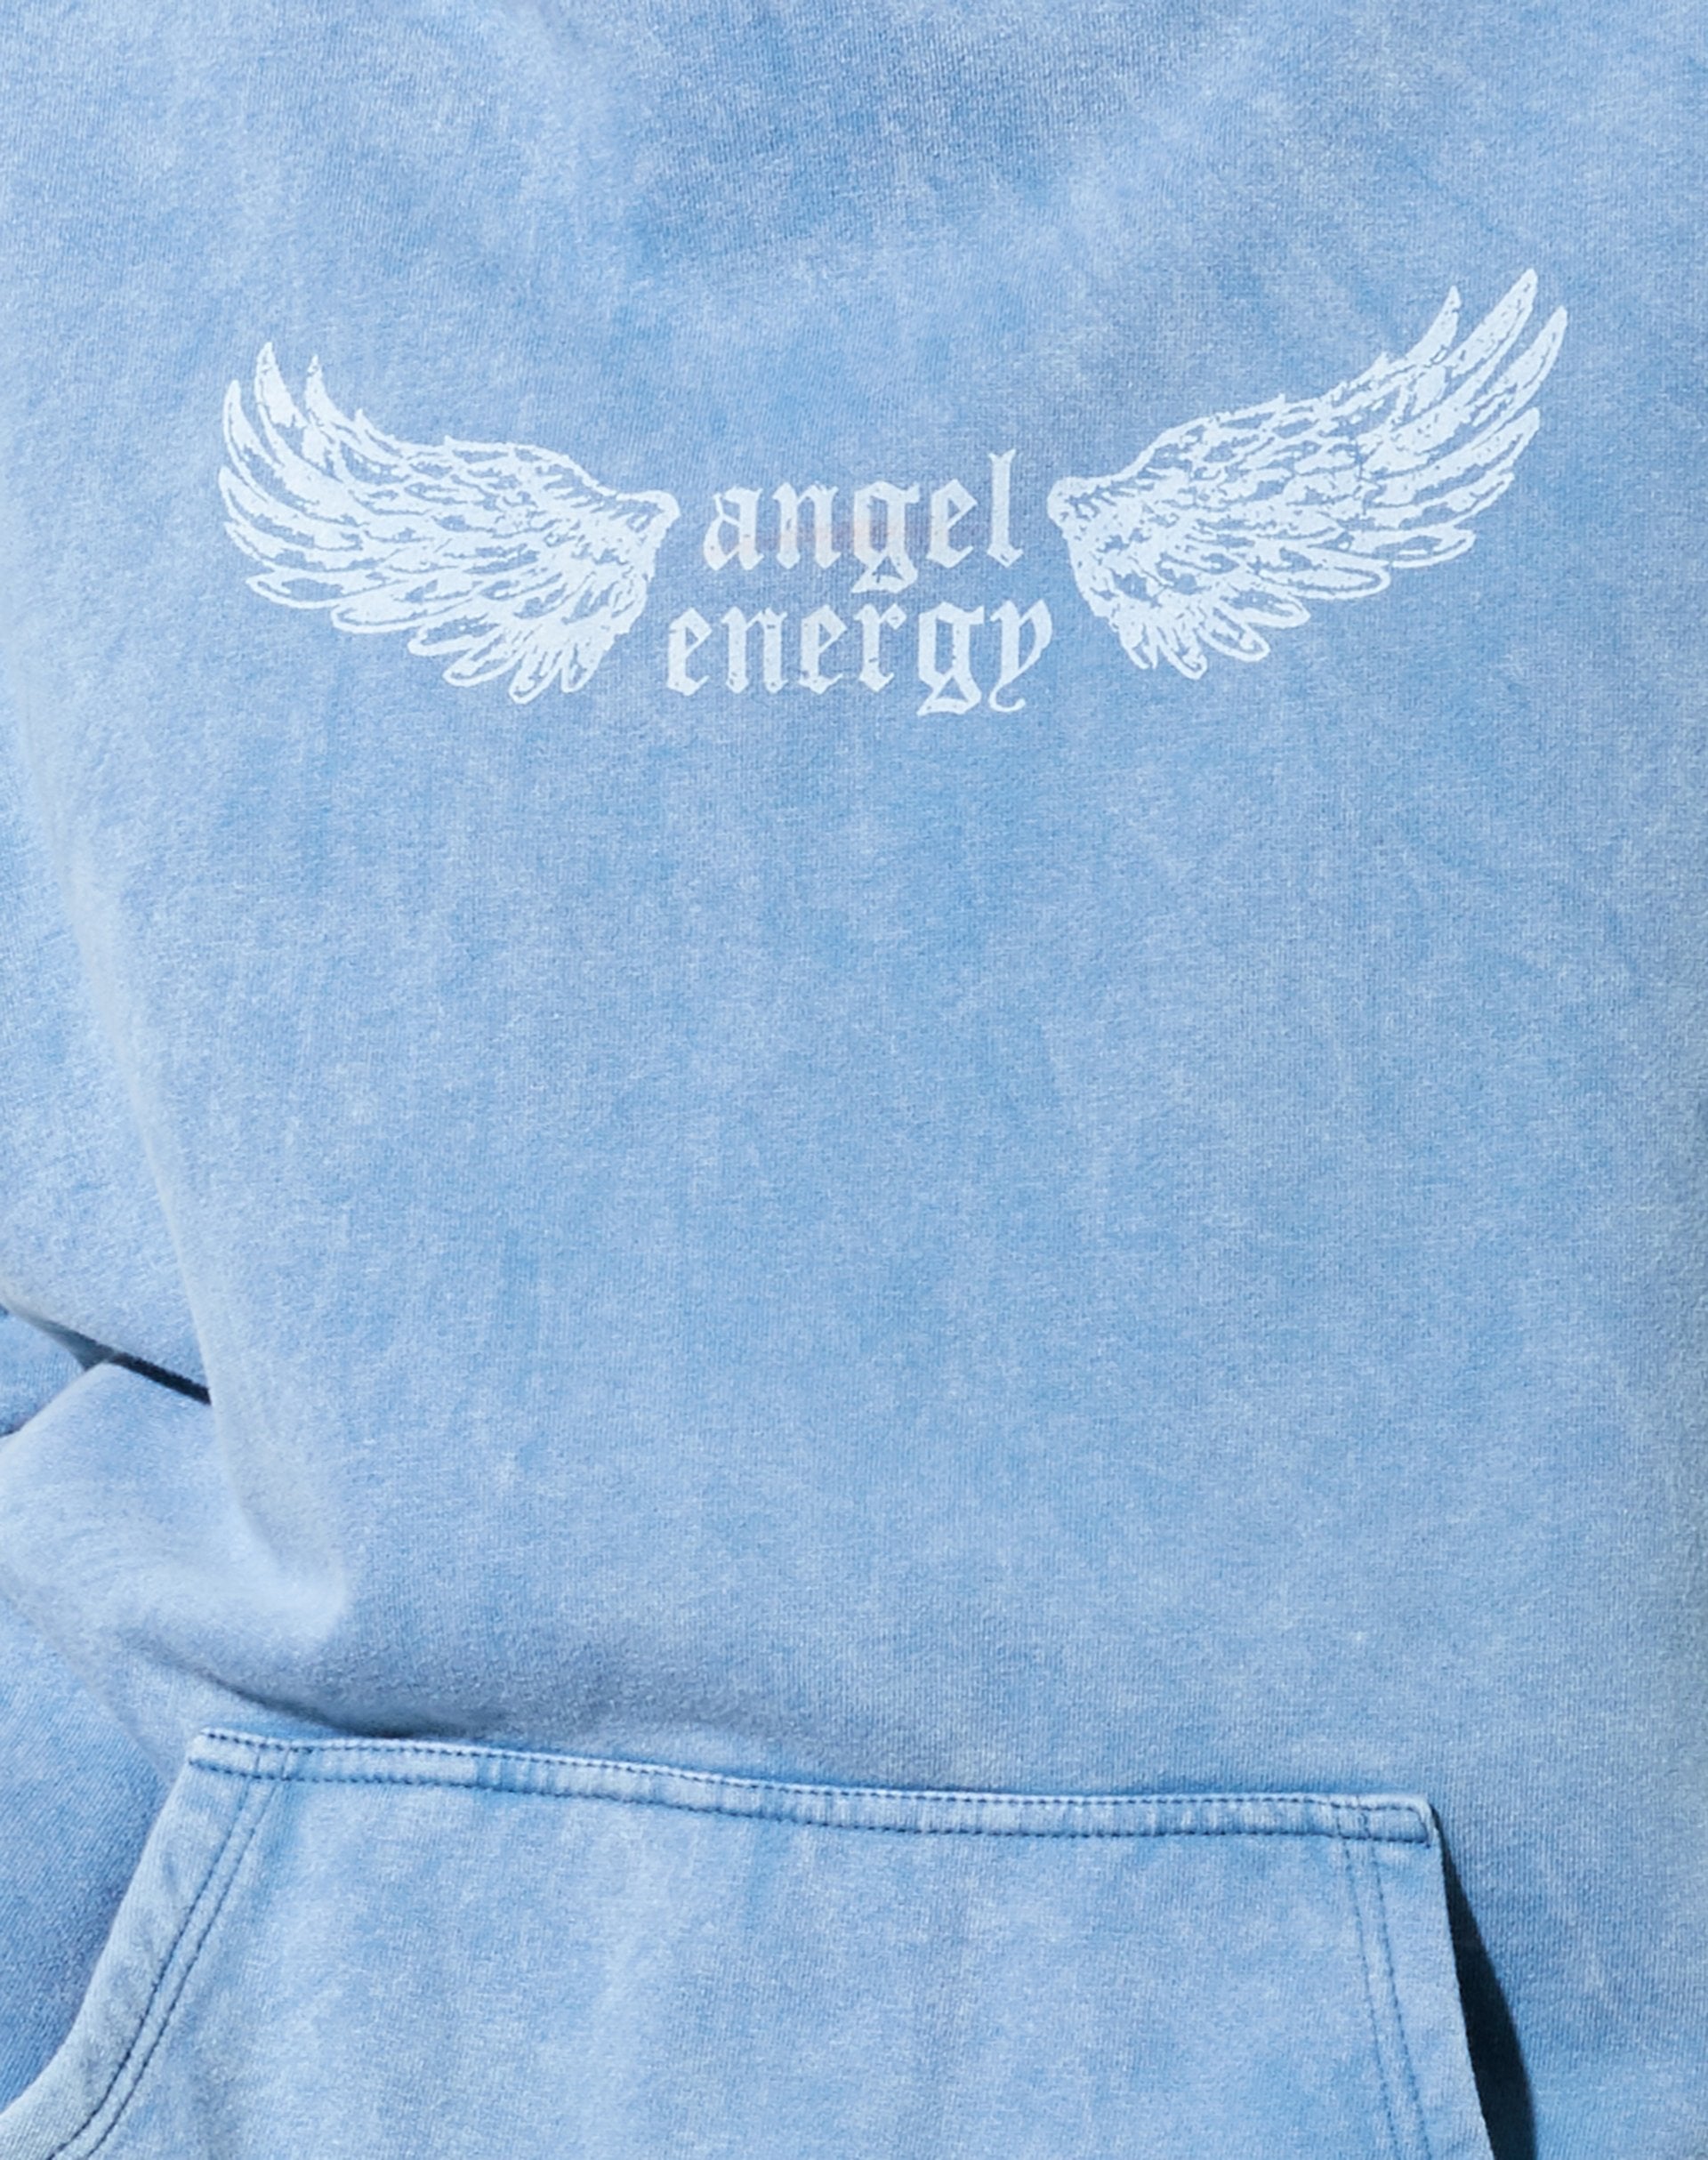 Oversize Hoodie in Washed Blue 'Angel Energy' Wings